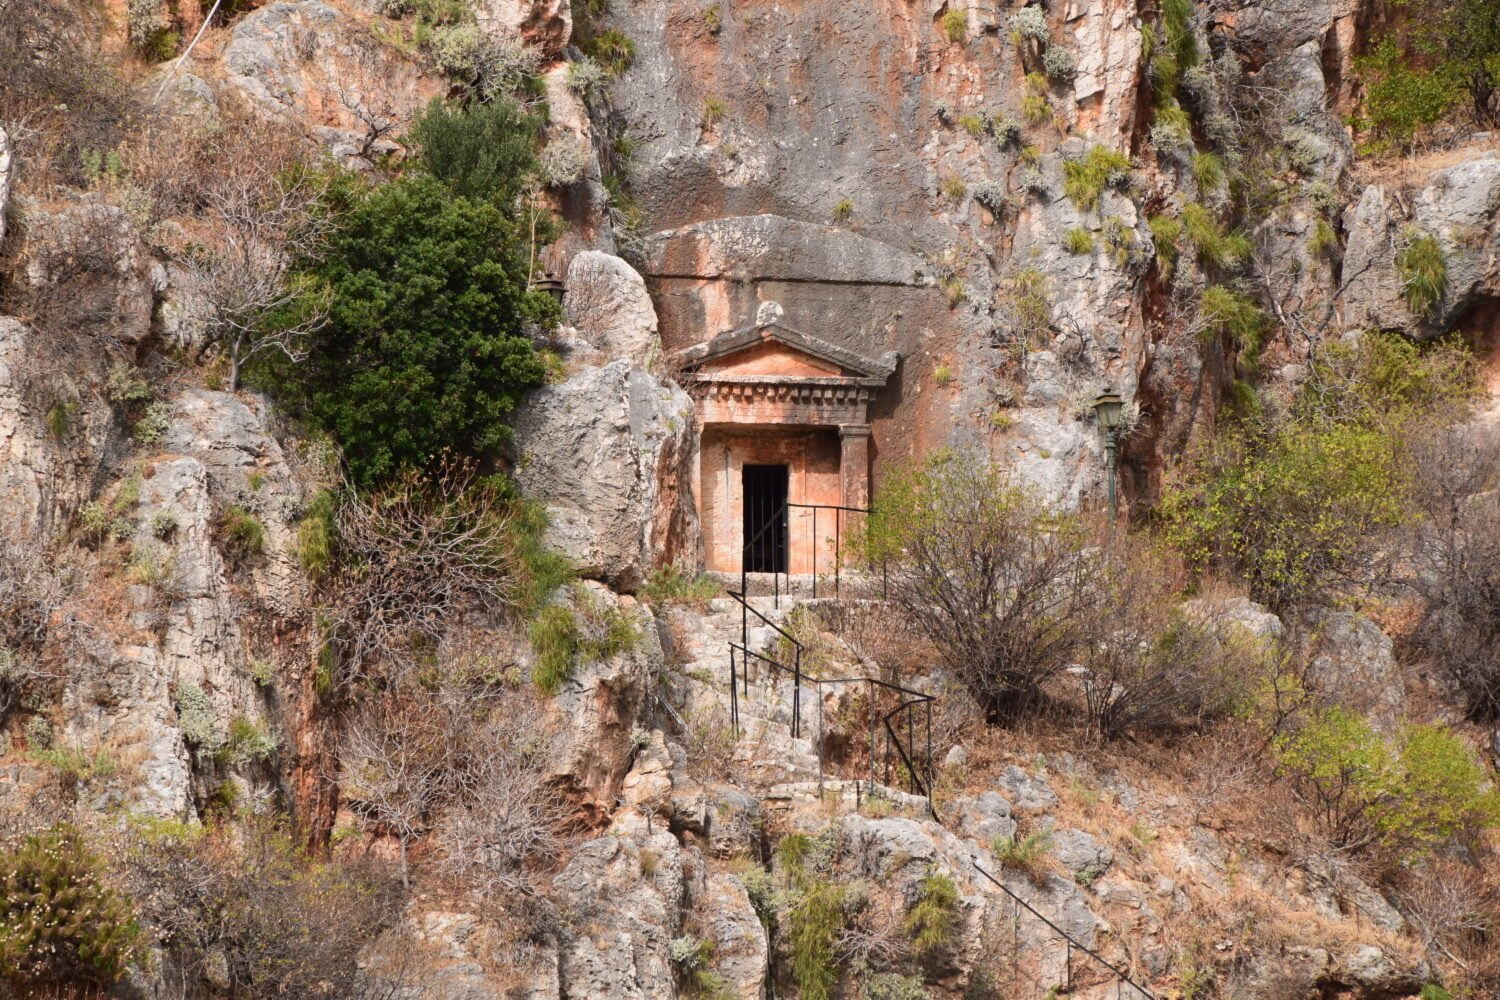 lycian tomb in kastellorizo